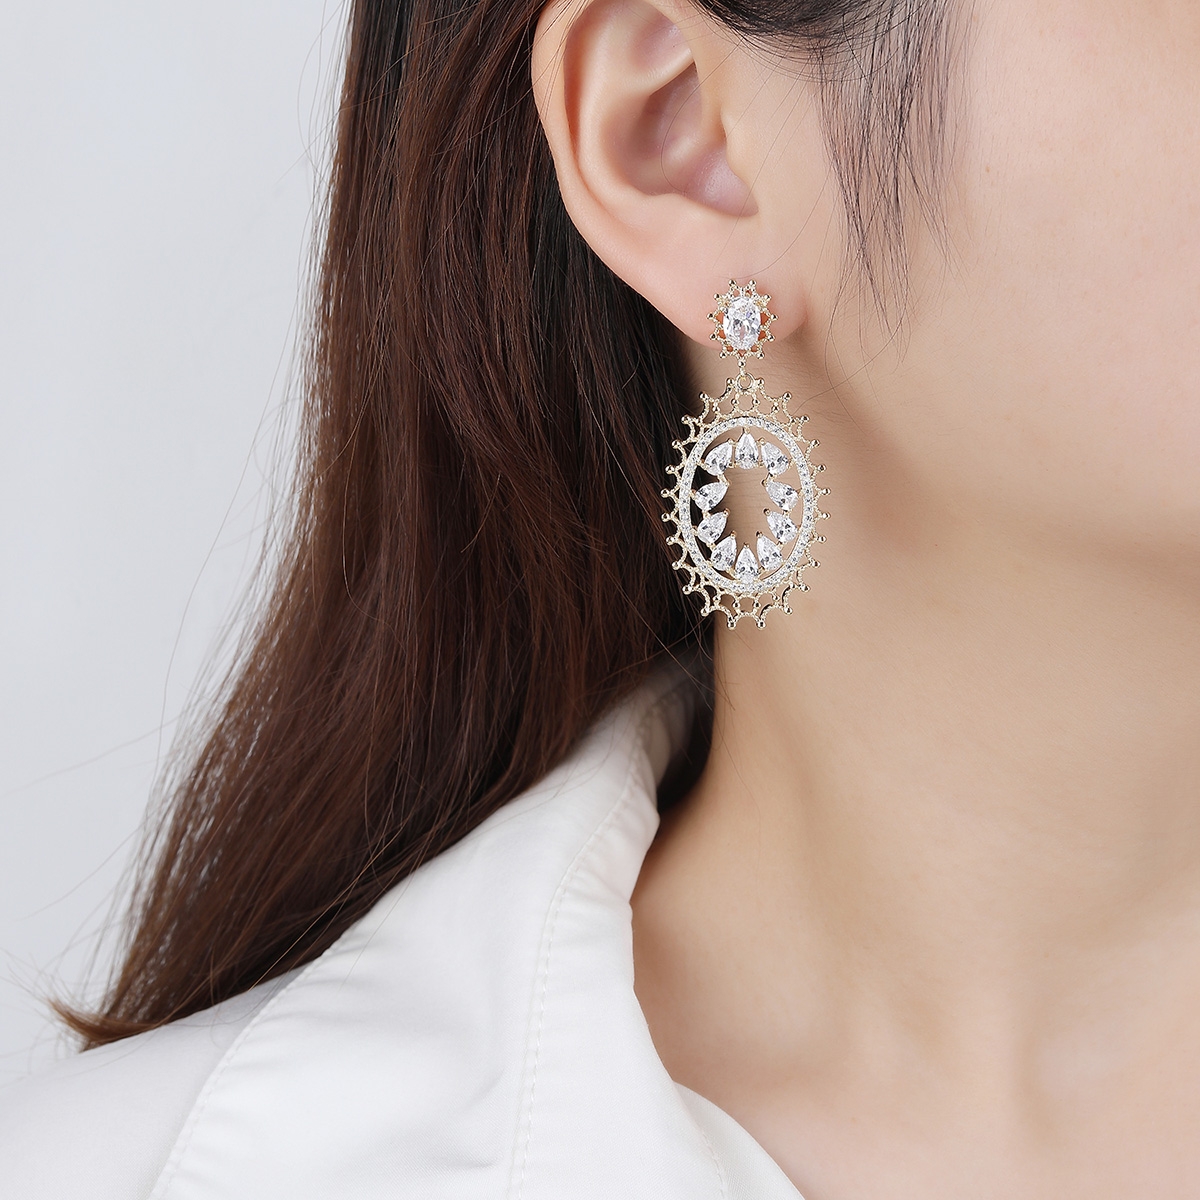 Brand New White Big Dangle Earrings with Full Guarantee